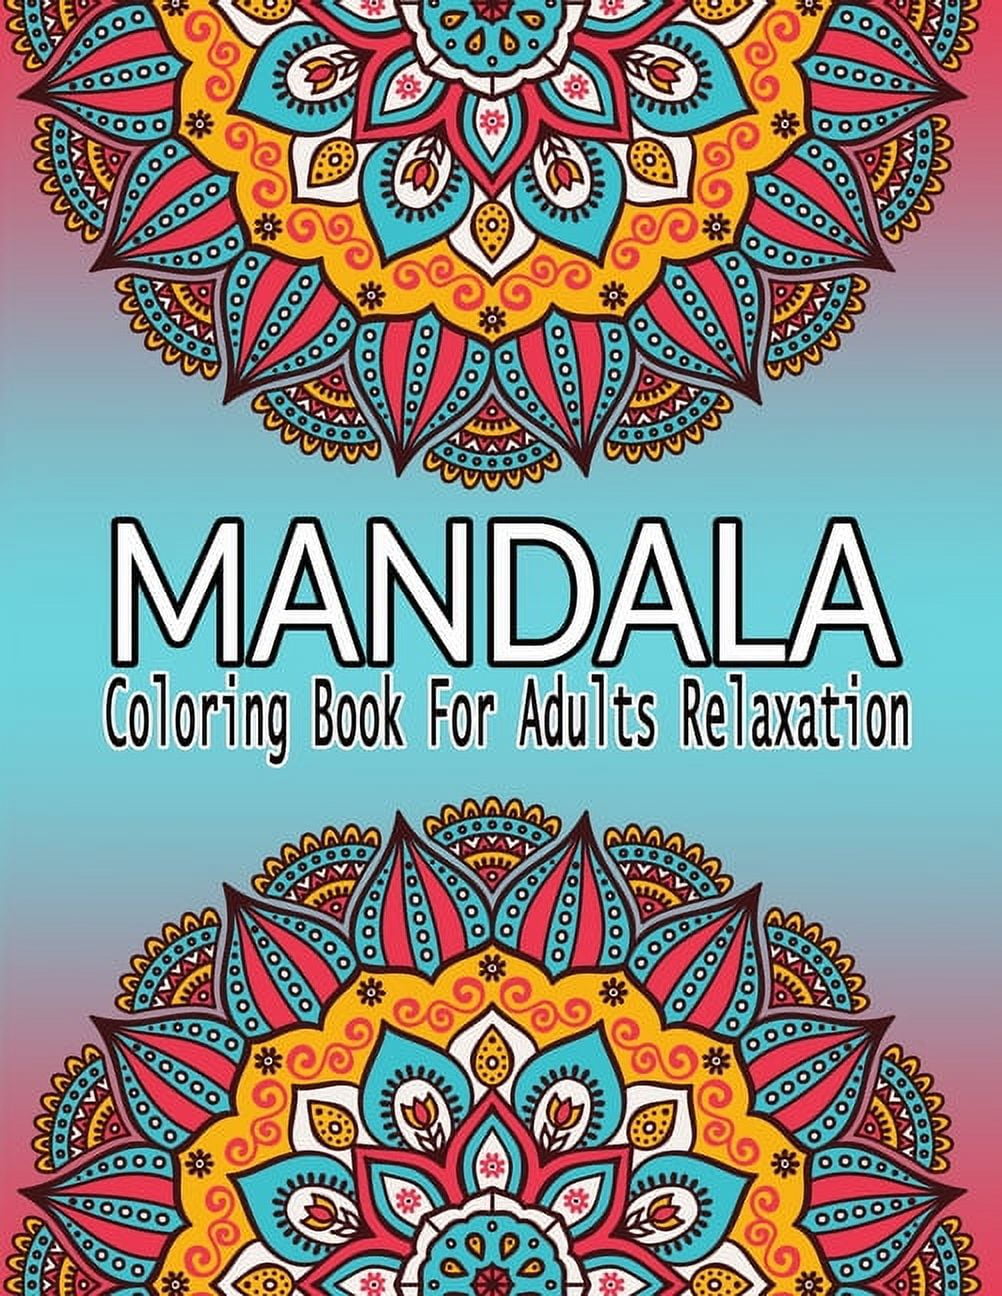 Adult Coloring Books Set - 3 Coloring Books for Grownups - 120 Unique Animals, Scenery & Mandalas